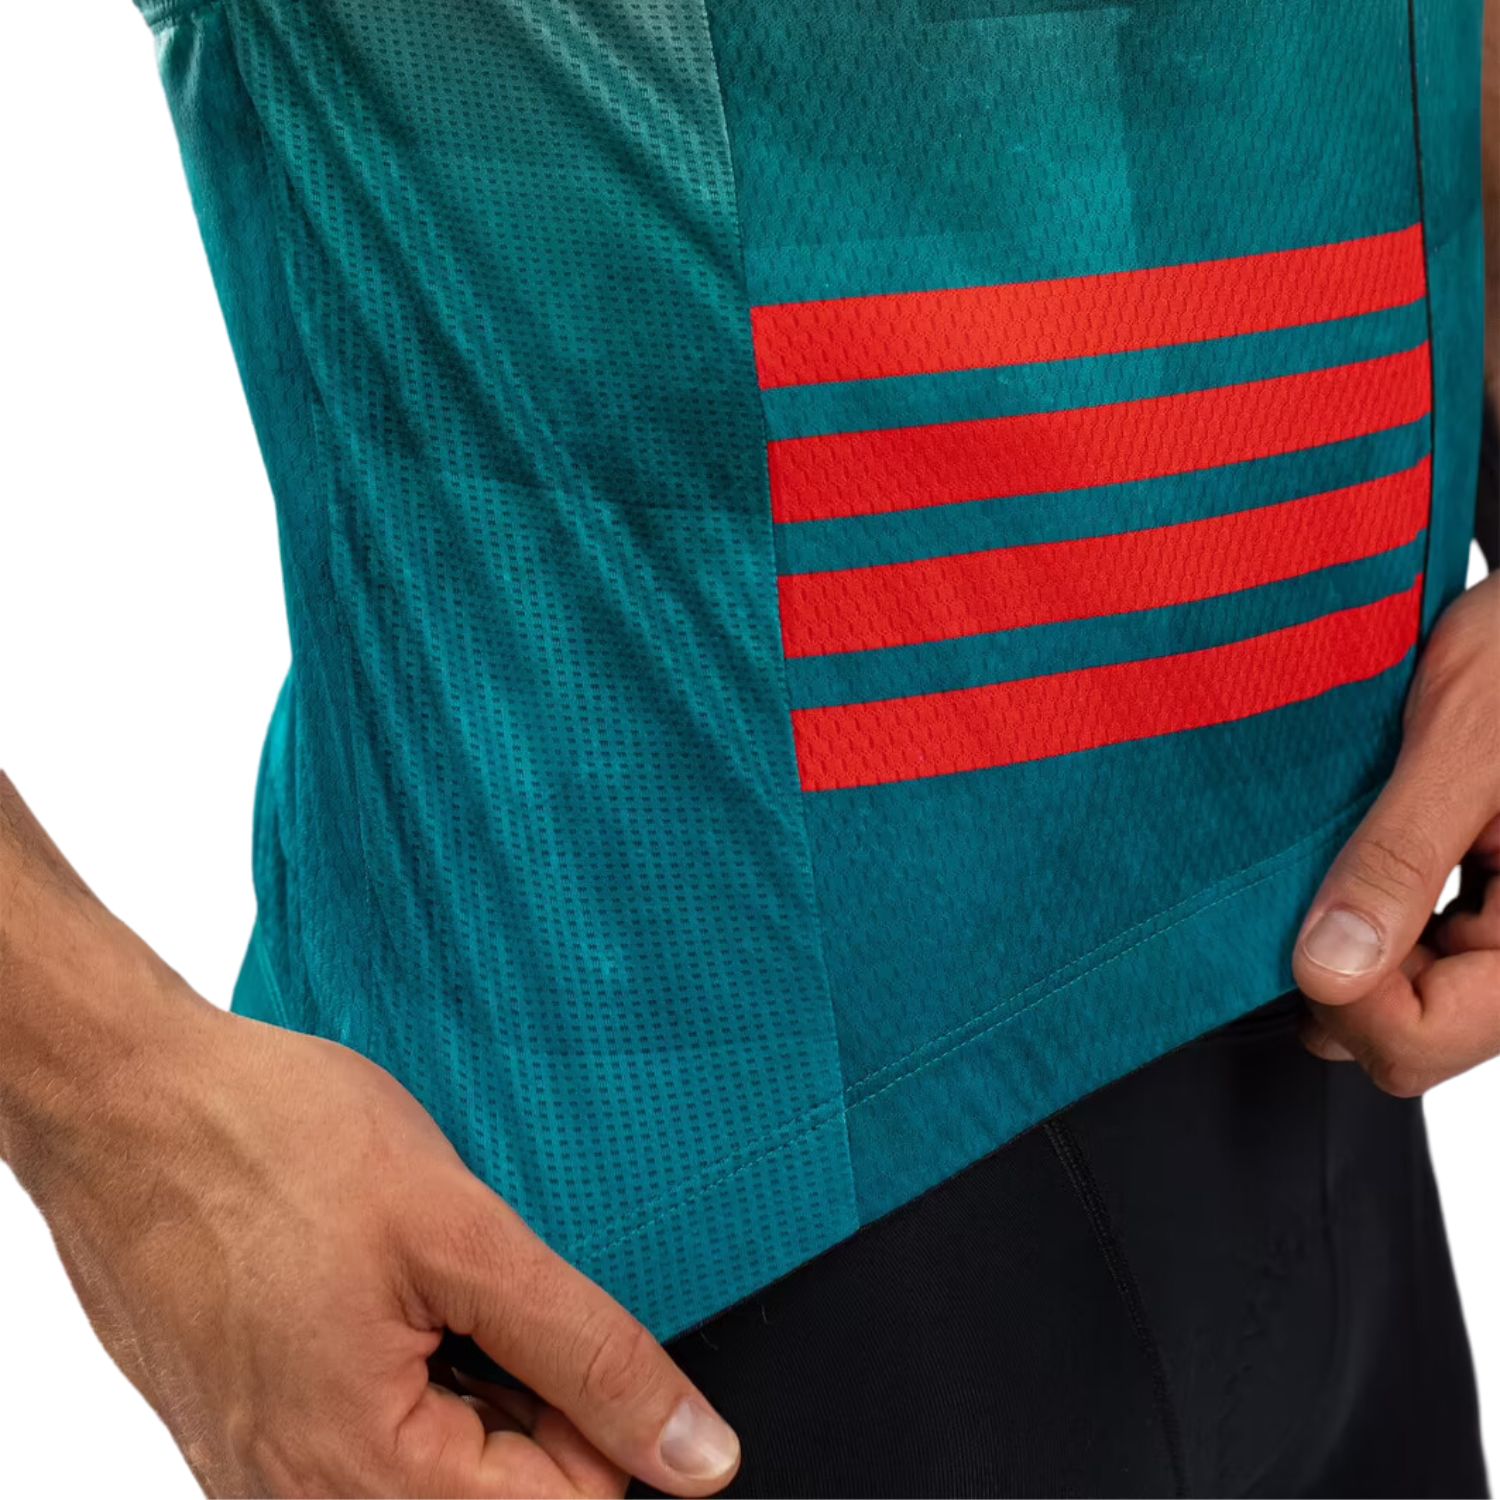 Camisa Freeforce Masculina Basic Ignite Laranja e Azul Confort Ciclismo